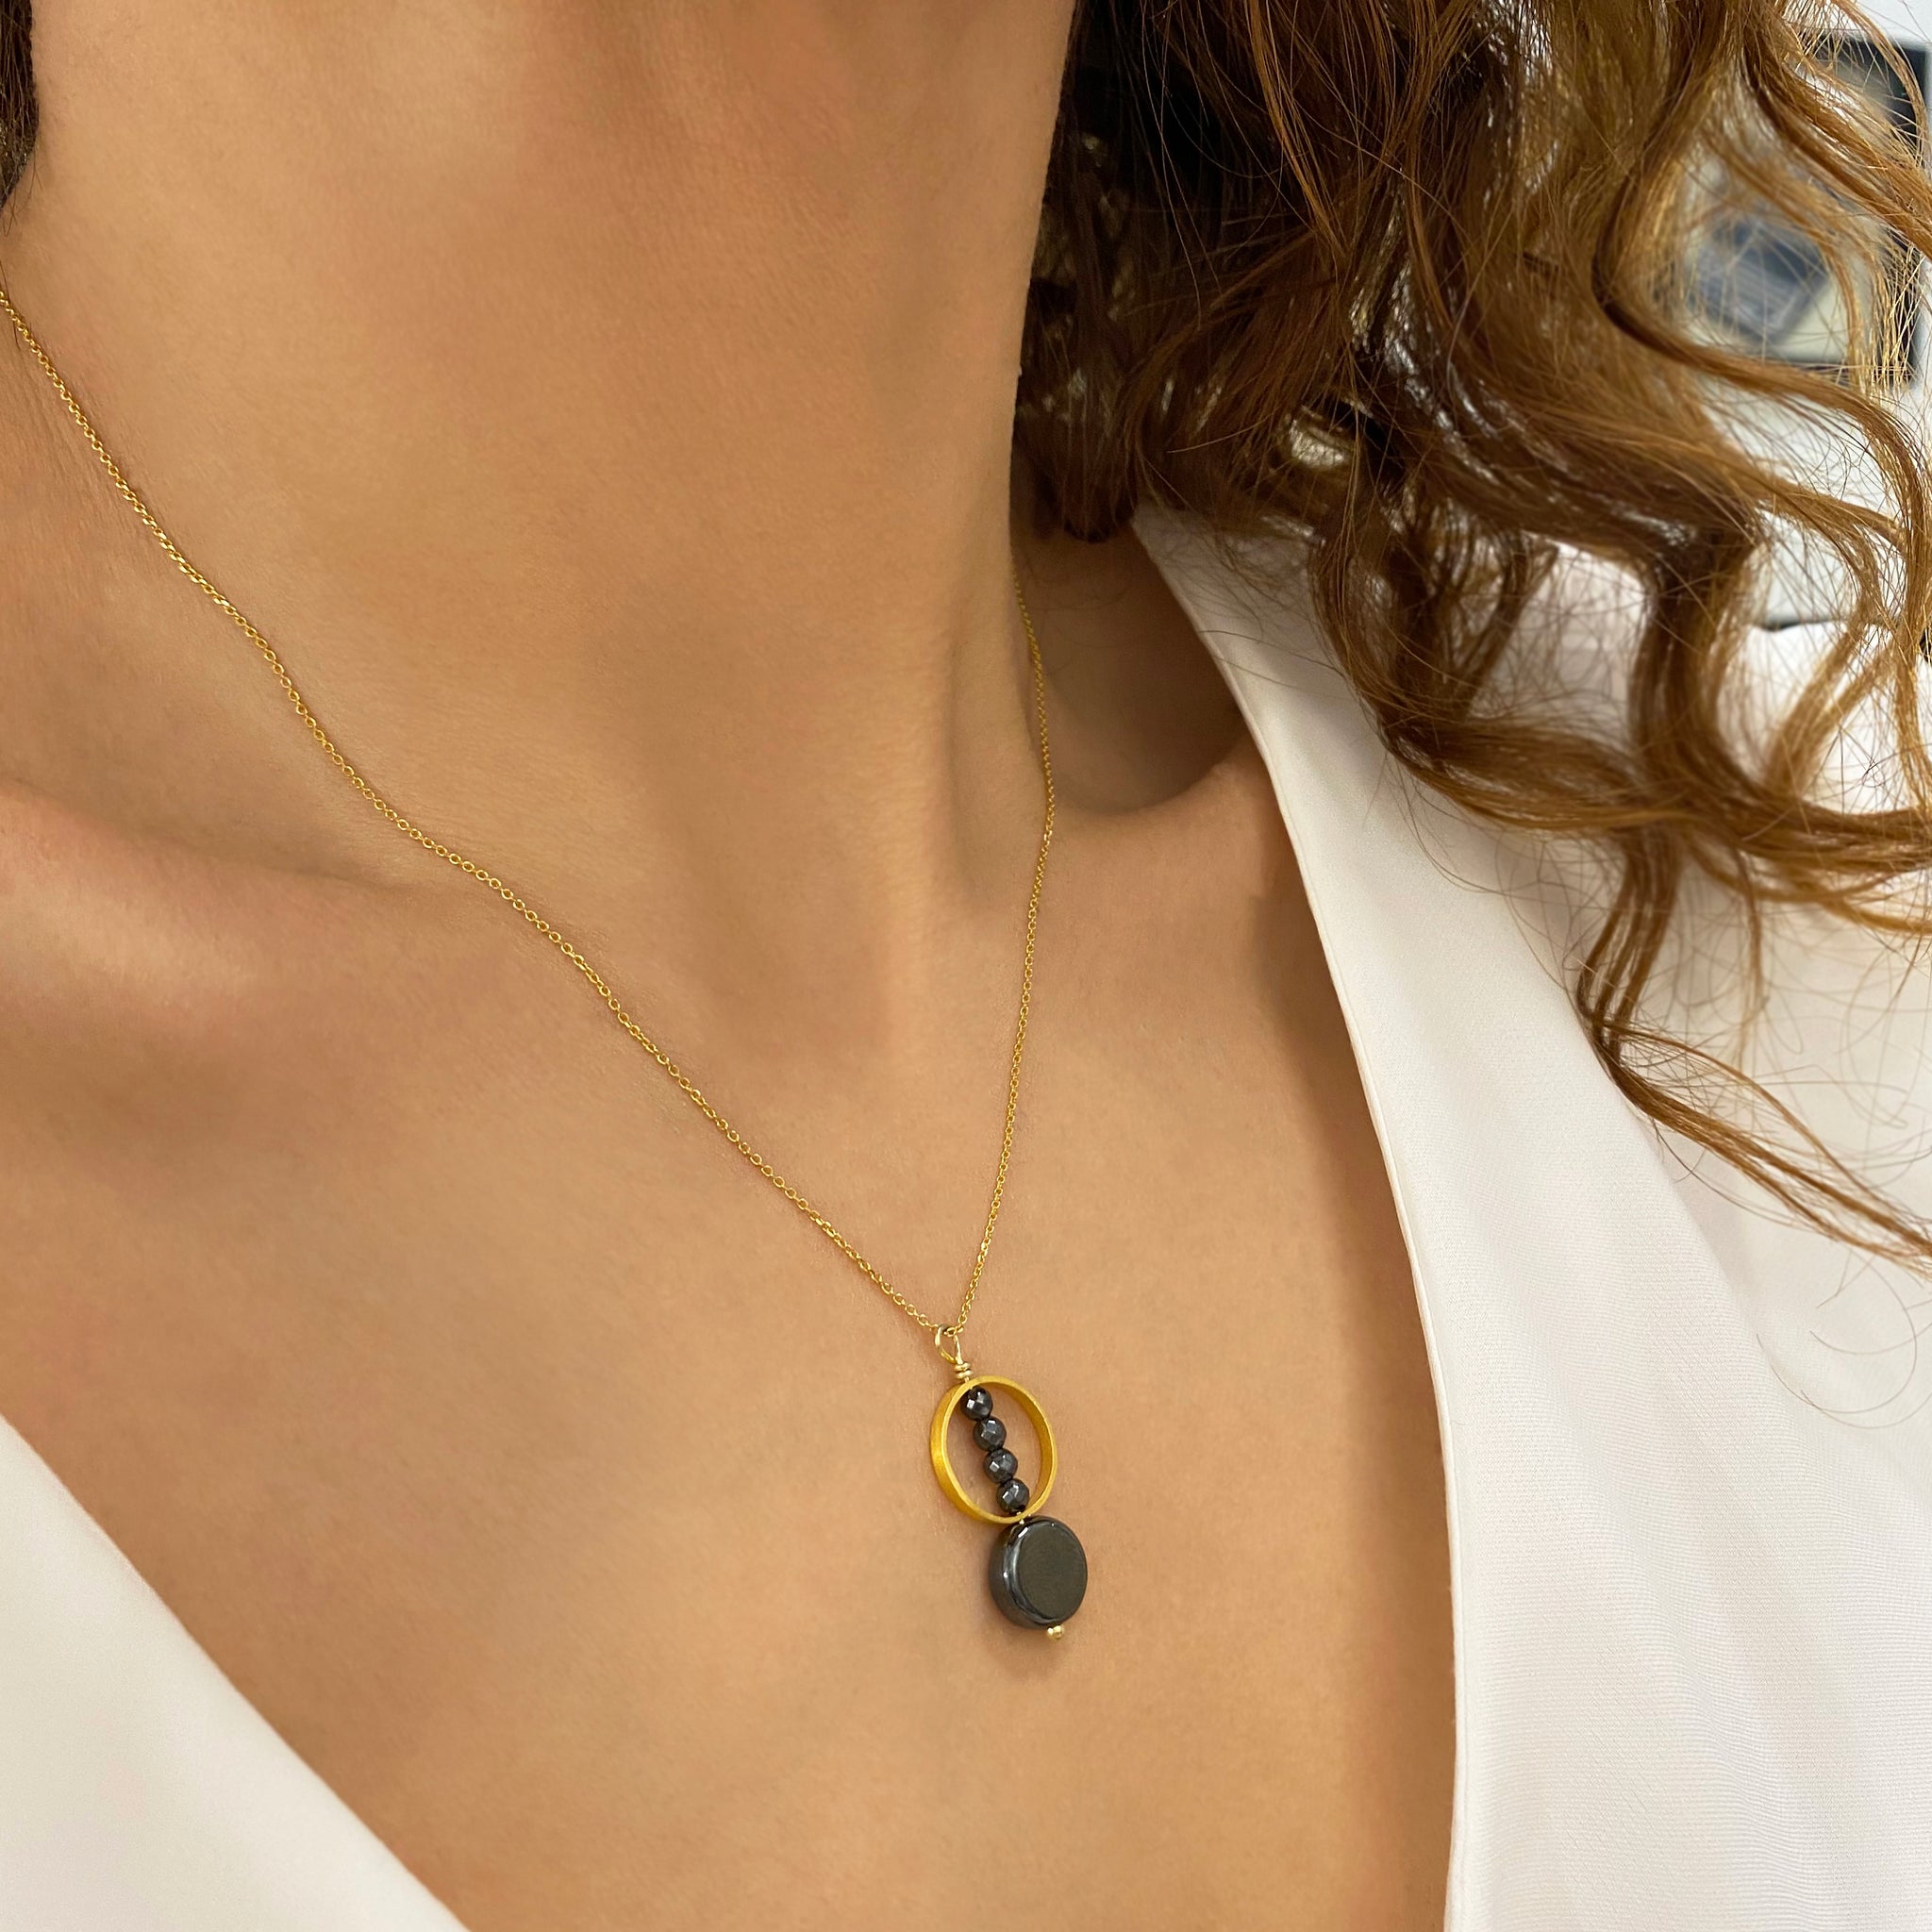 Fidget Necklace with a hematite pendant! 925 Sterling silver & hematite gem